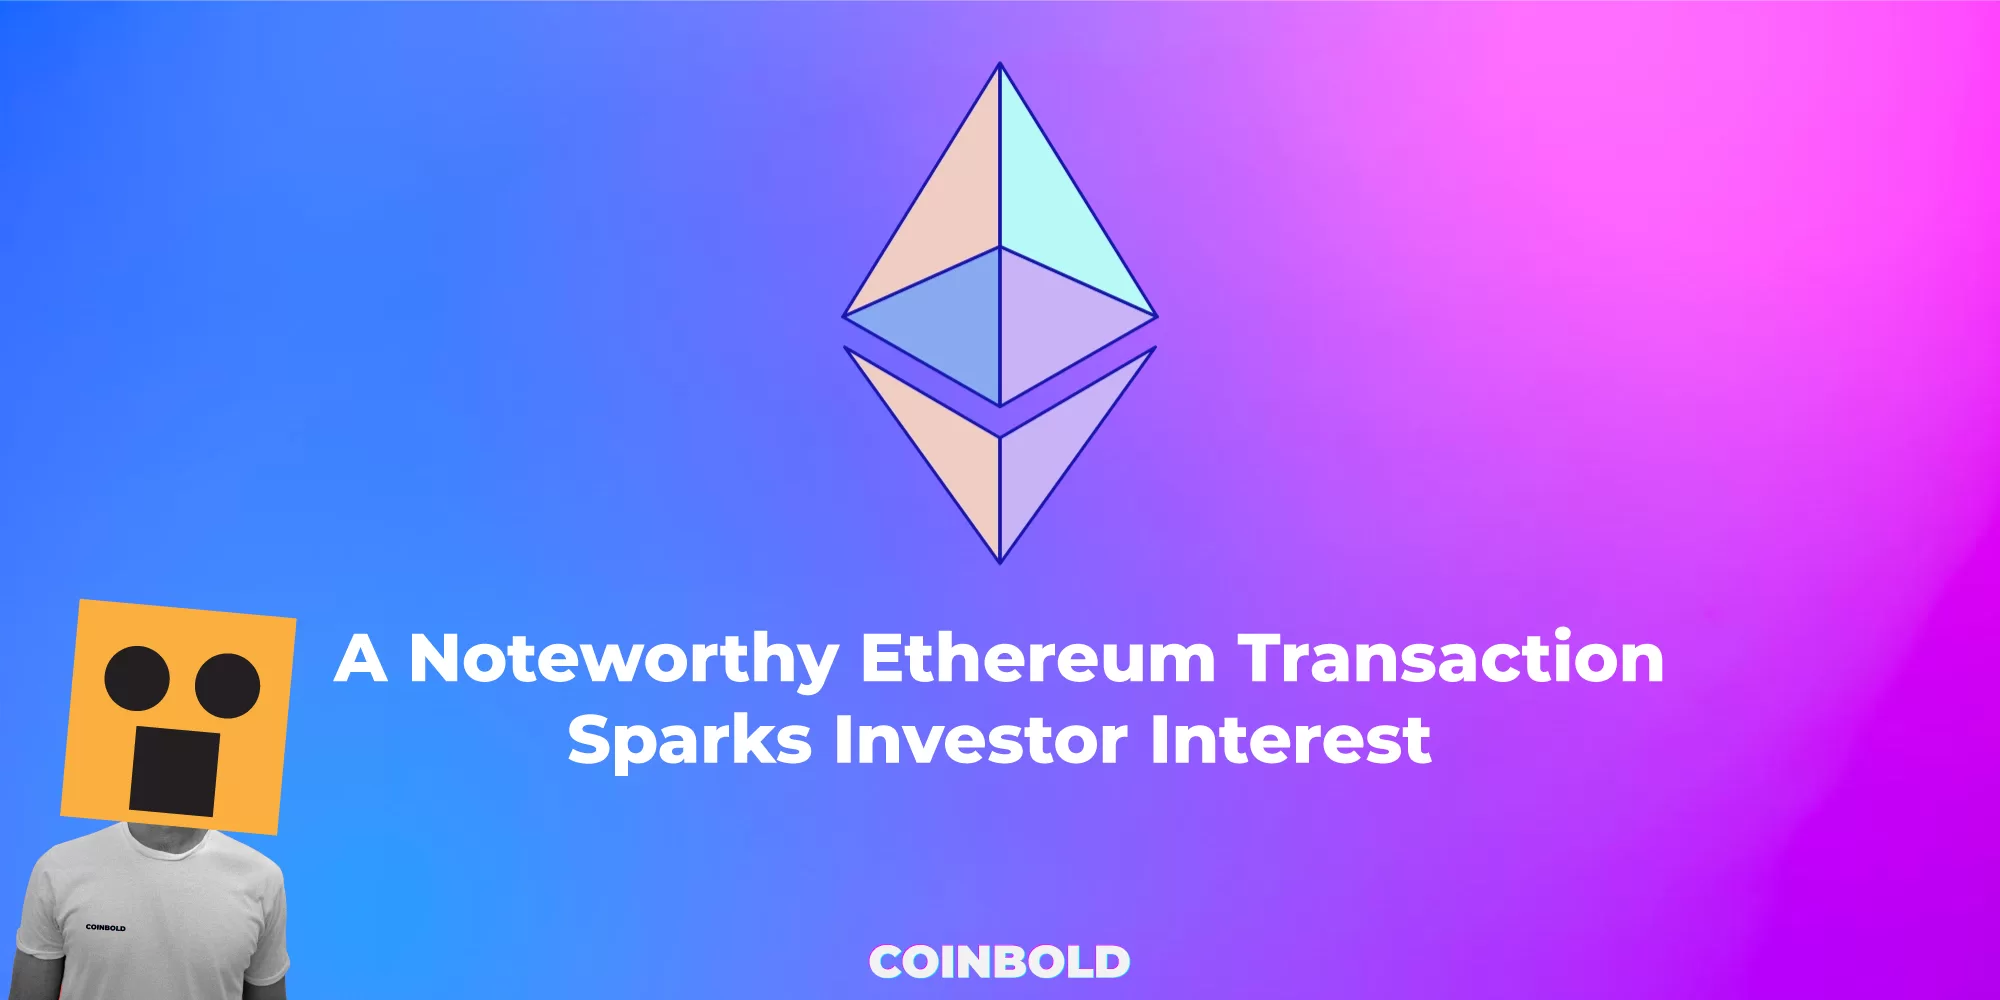 A Noteworthy Ethereum Transaction Sparks Investor Interest